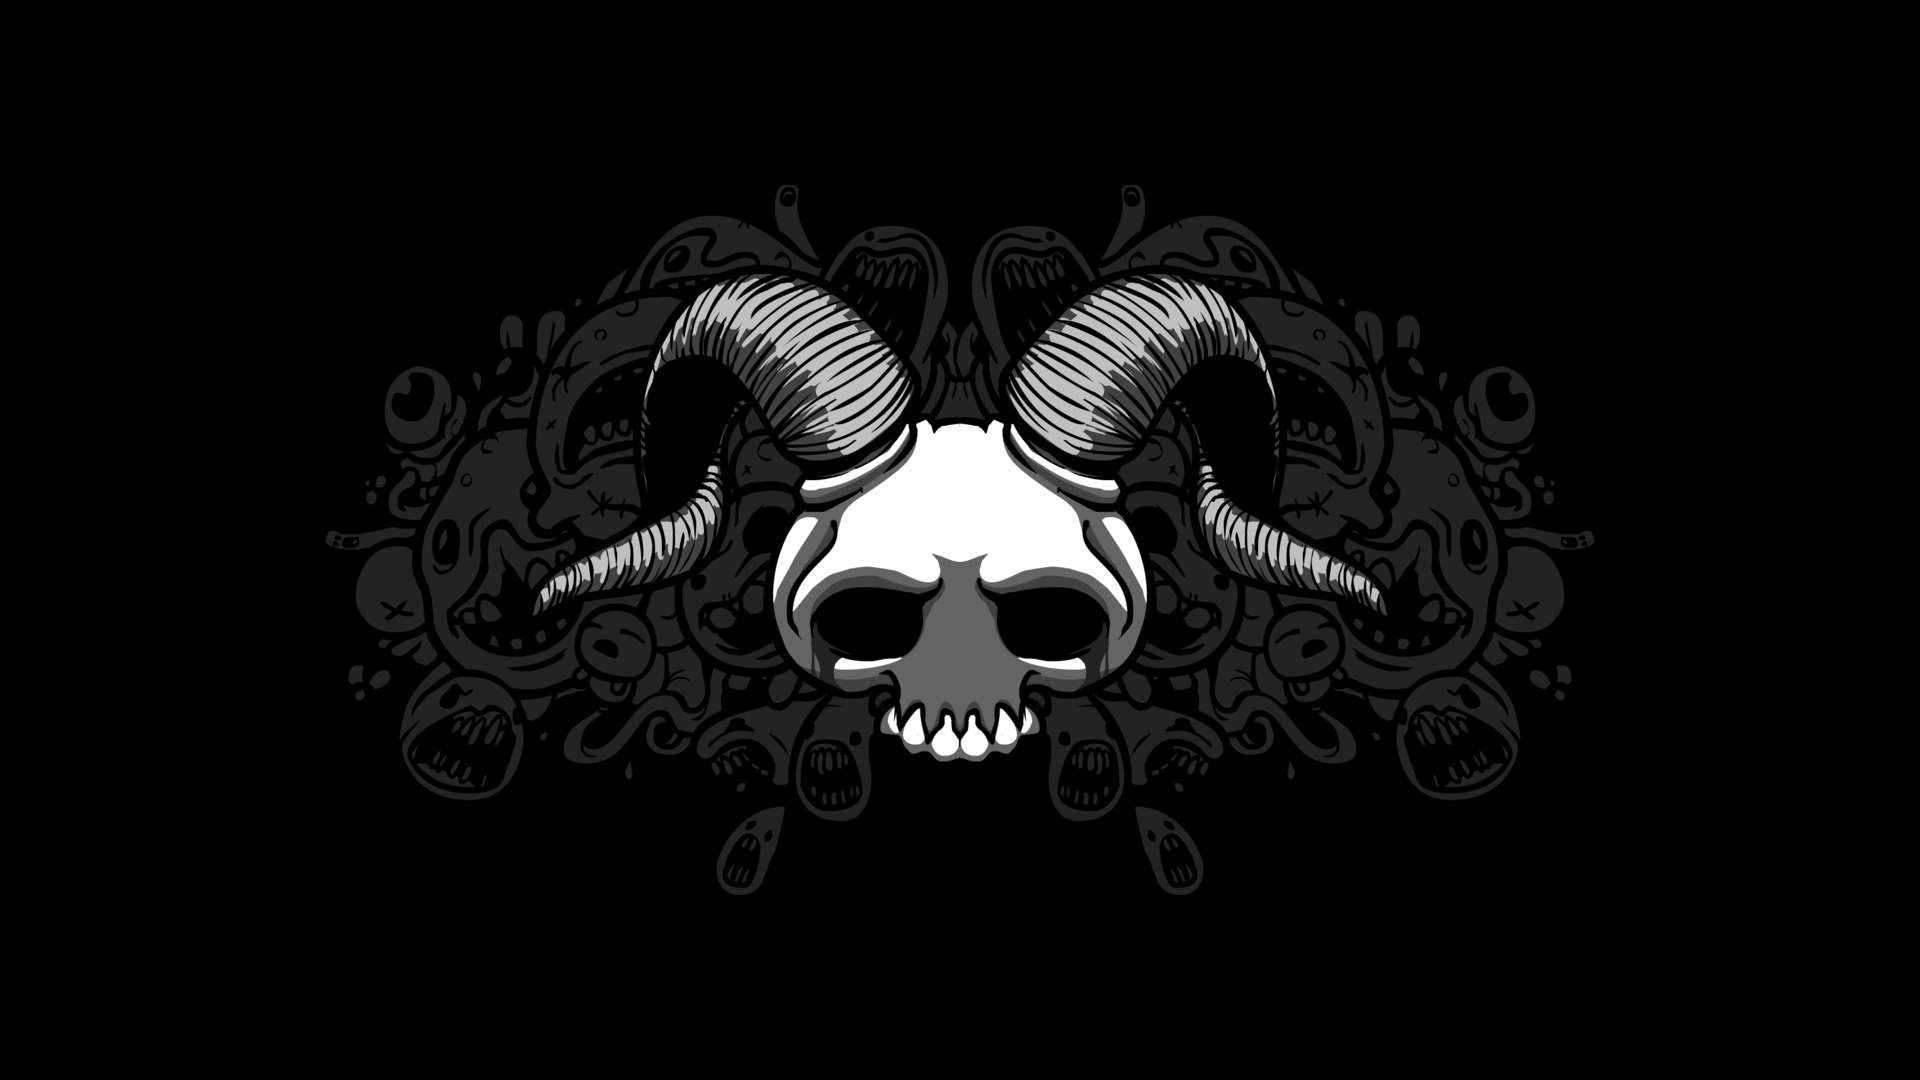 Wallpaper id the binding of isaac black skull dark horns monochrome free download